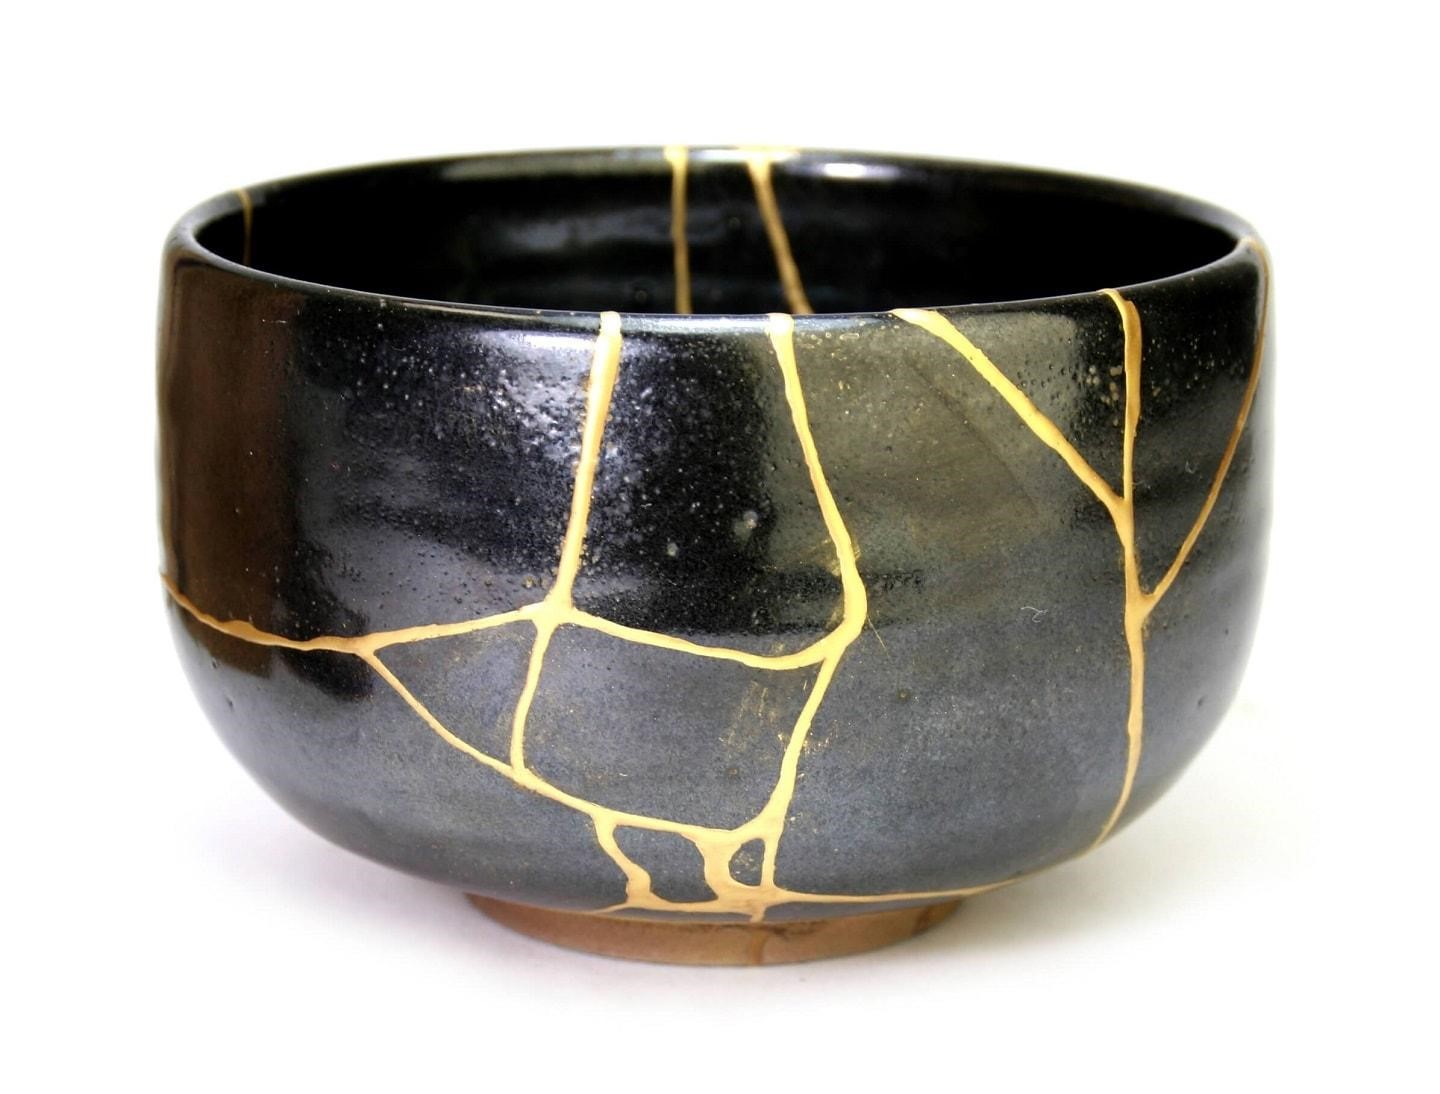 Antique Broken Japanese Black Bowl Repaired With Gold Kintsugi ...